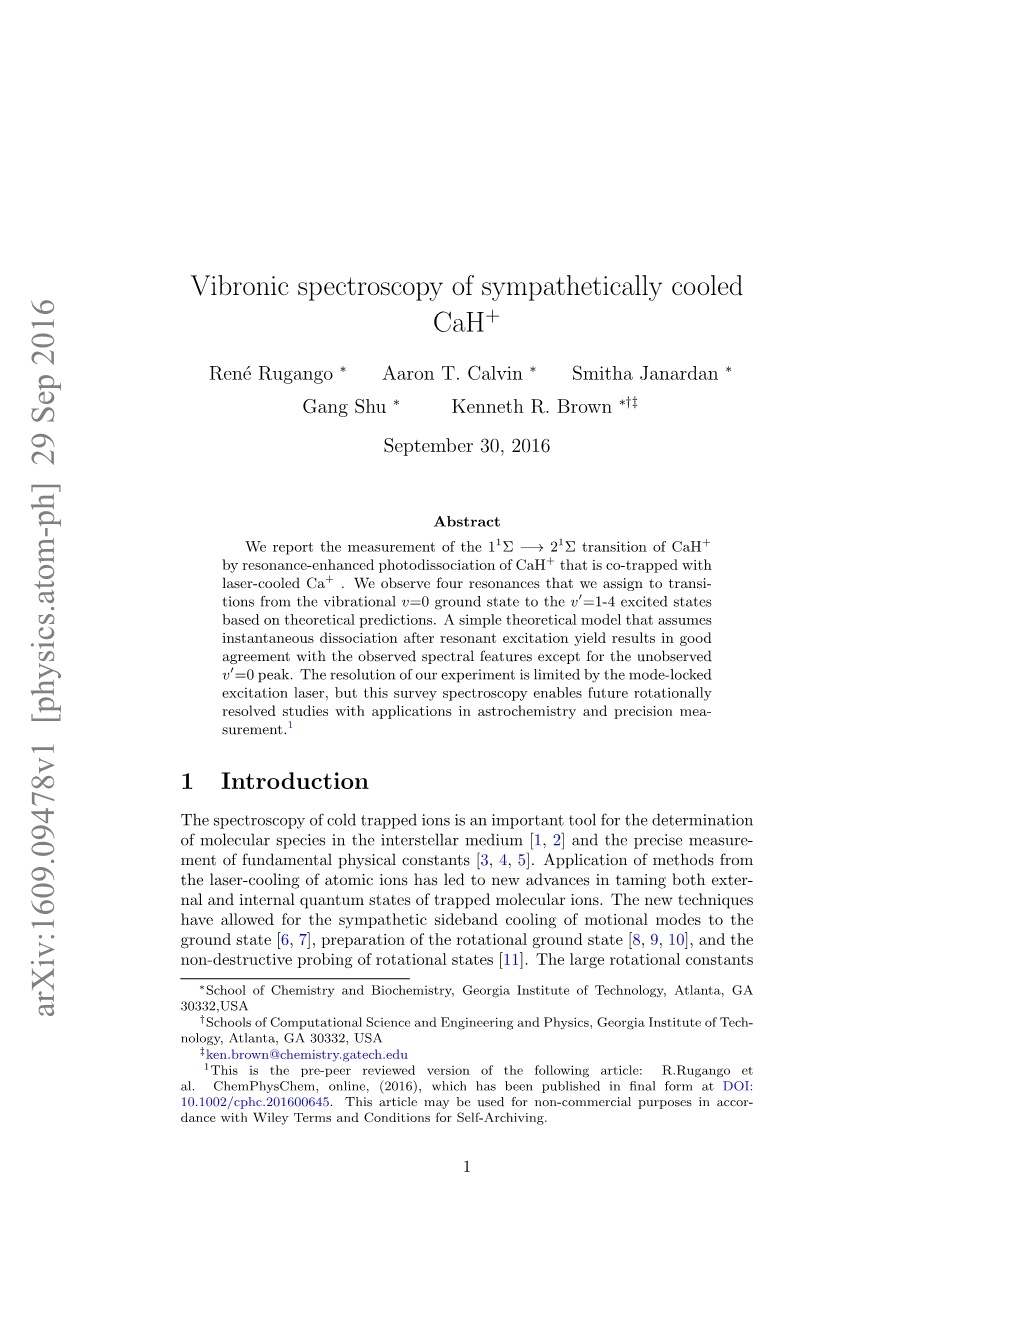 Vibronic Spectroscopy of Sympathetically Cooled Cah+